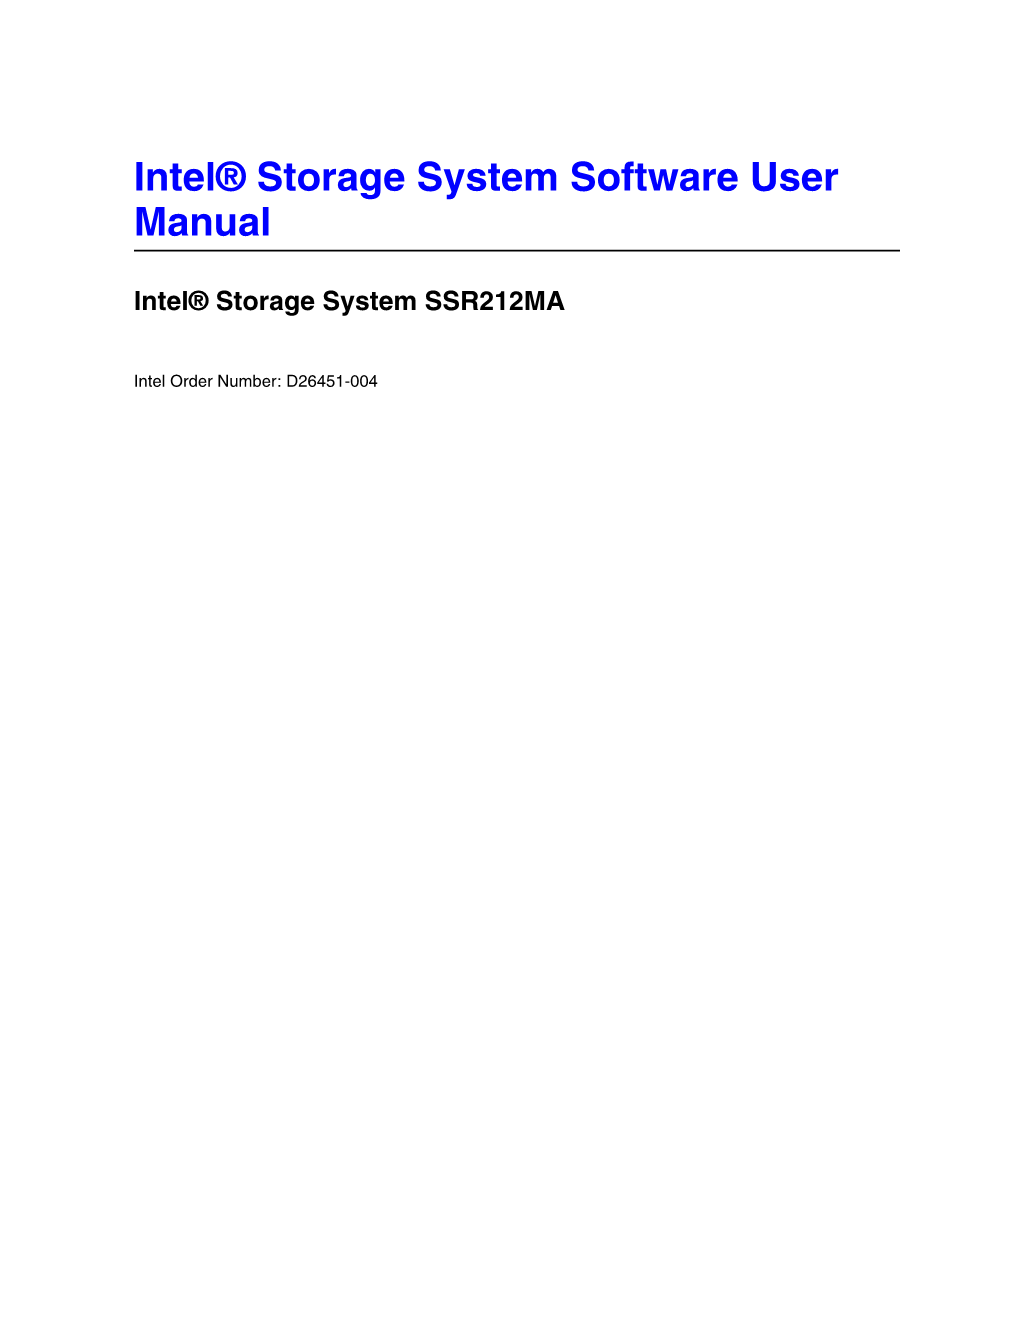 Intel® Storage System Software User Manual